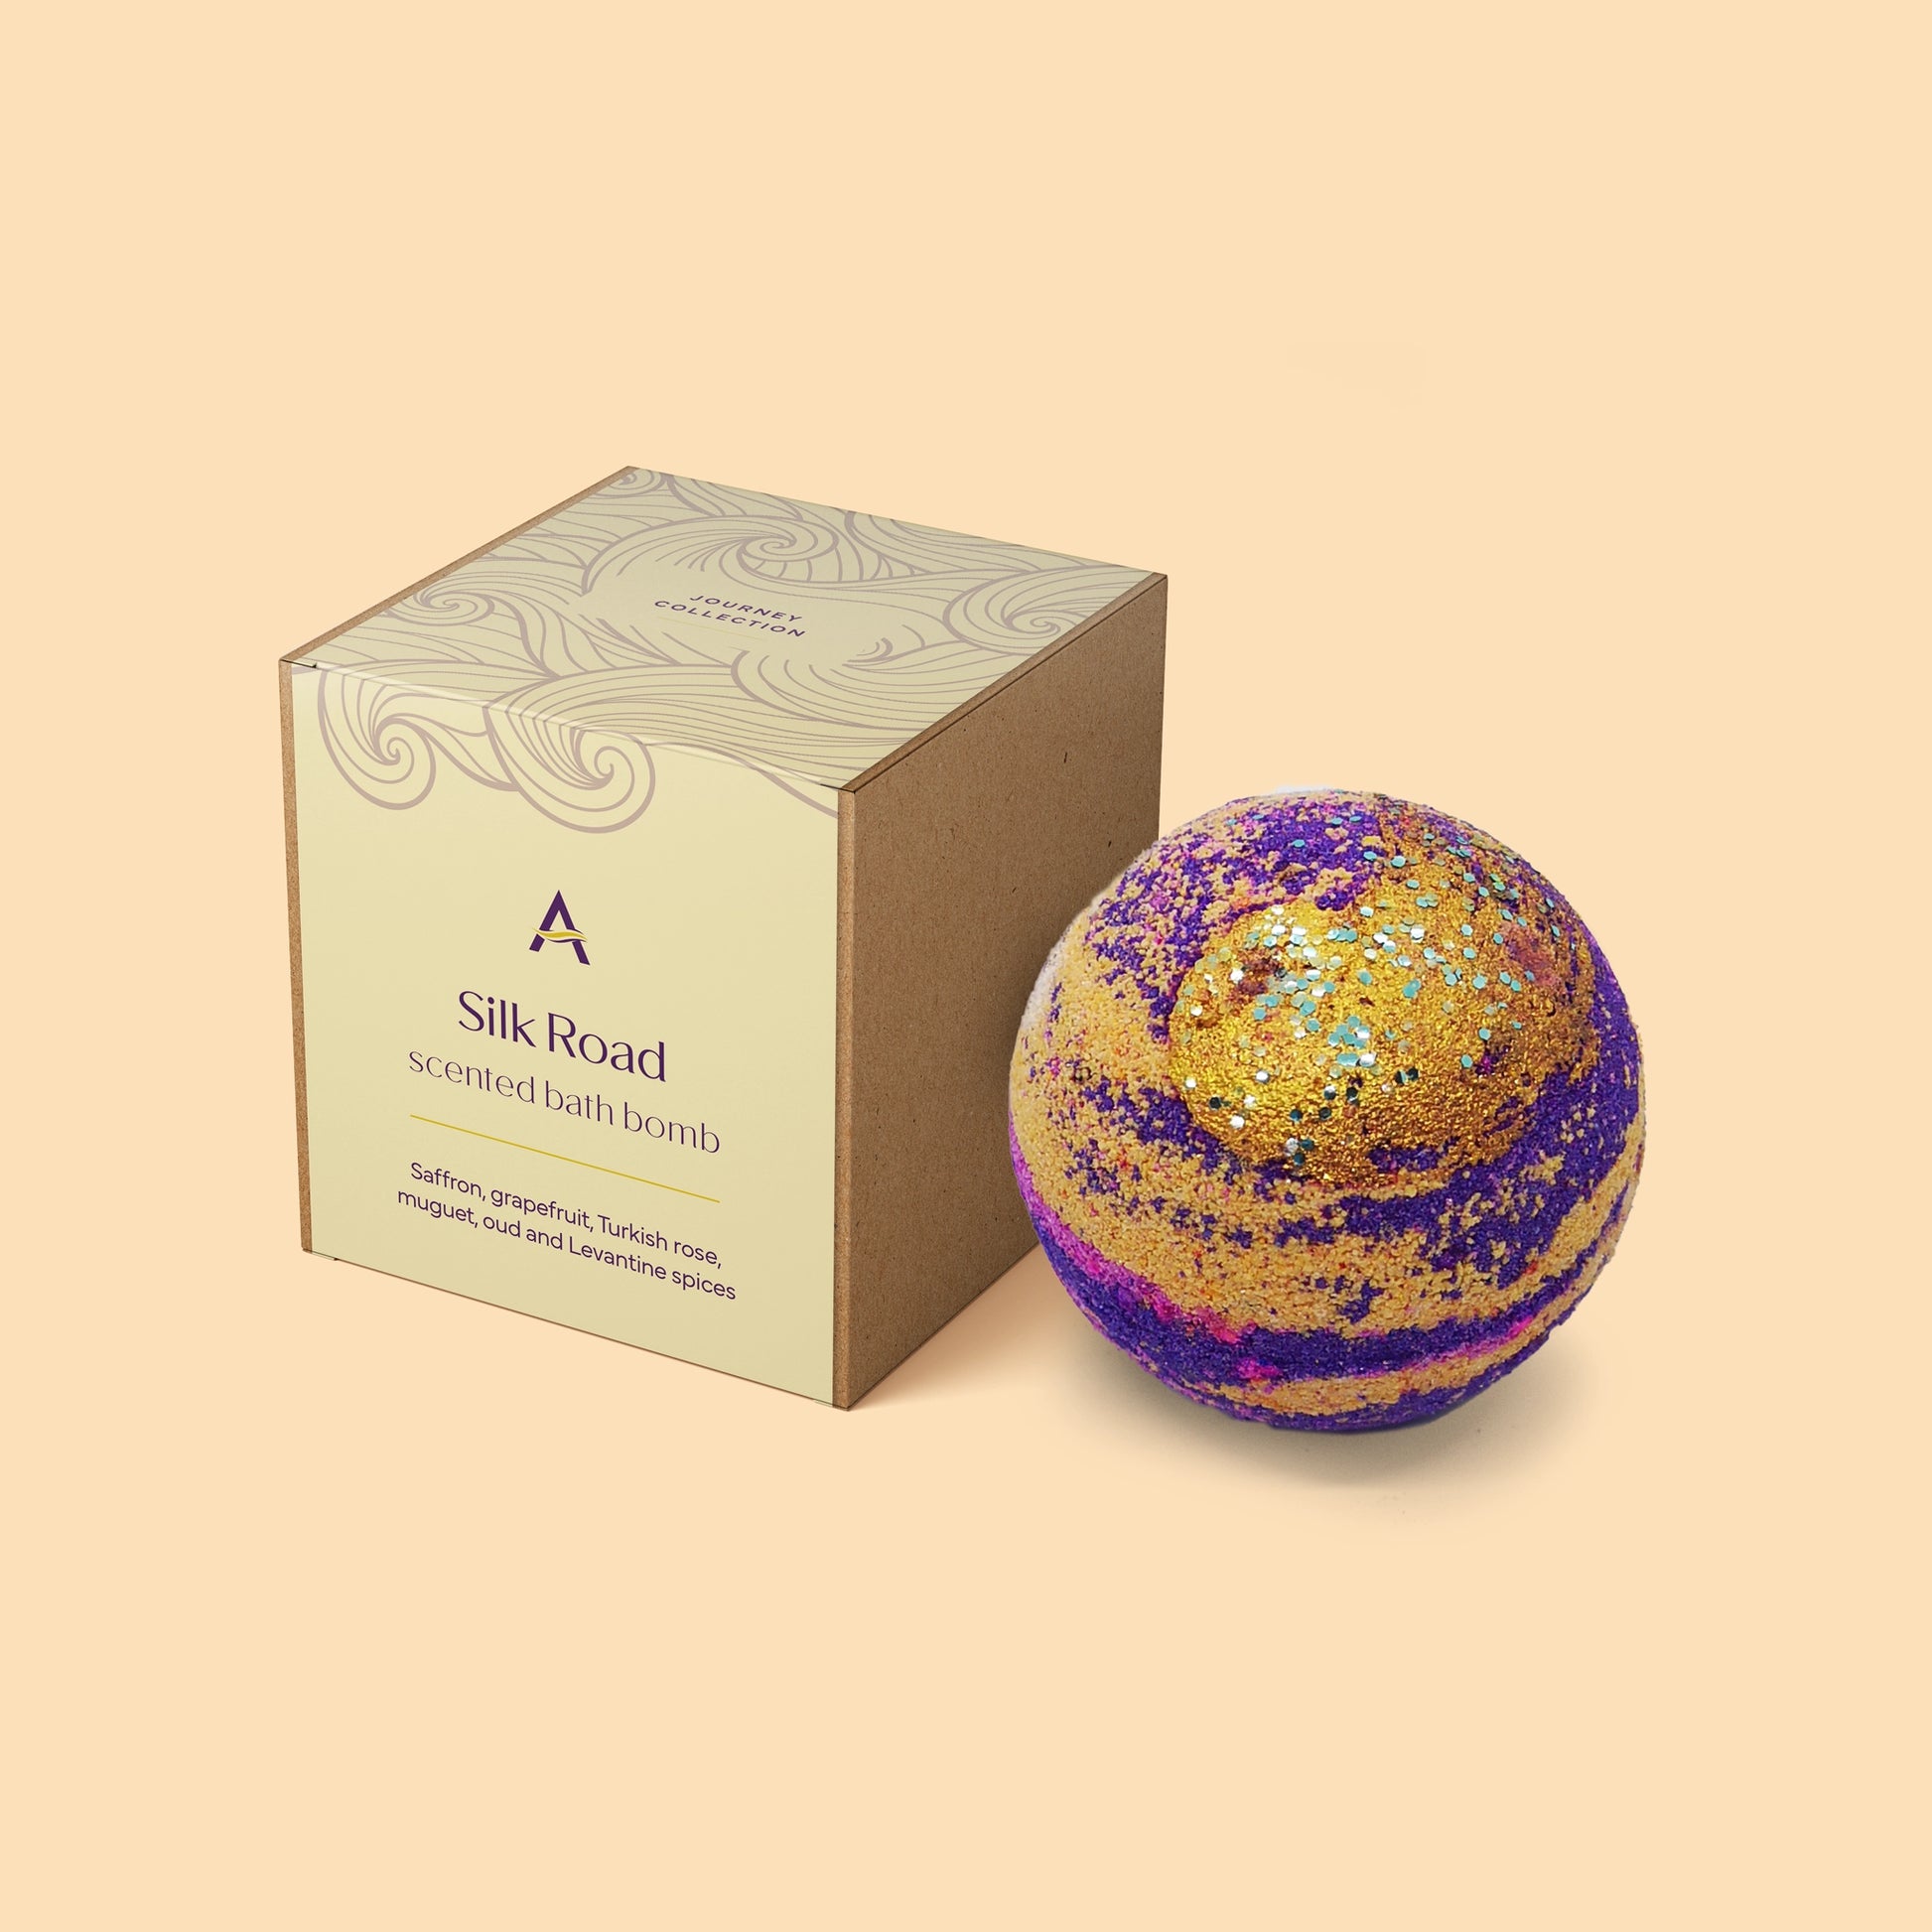 Silk Road exotic oud bath bomb with box 